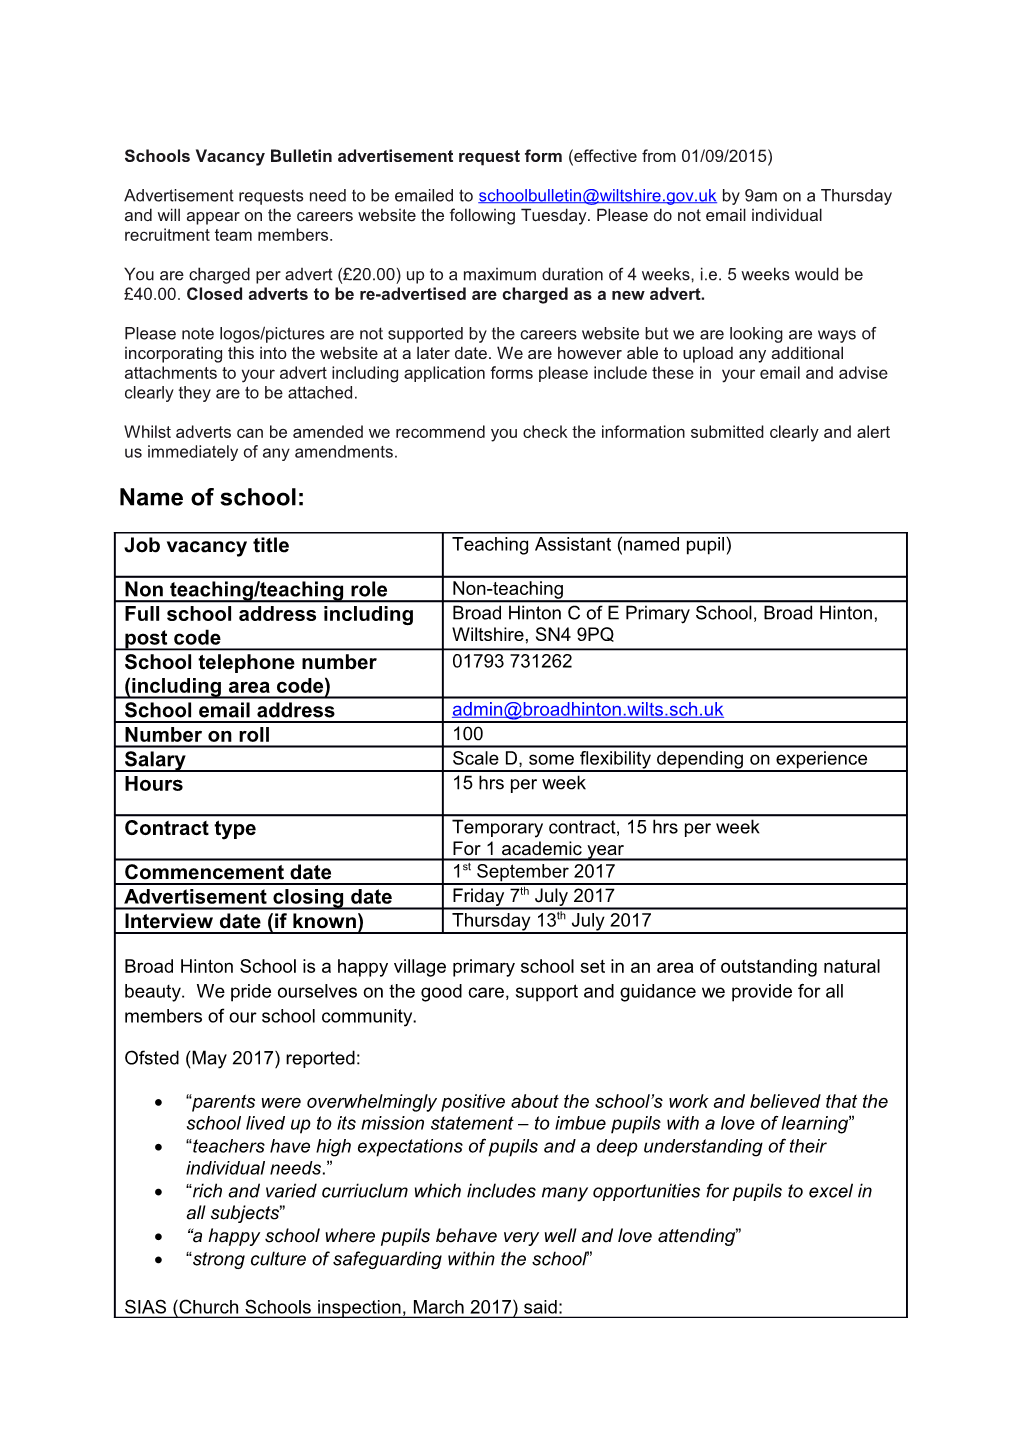 Schools Vacancy Bulletin Advertisement Request Form (Effective from 01/09/2015)